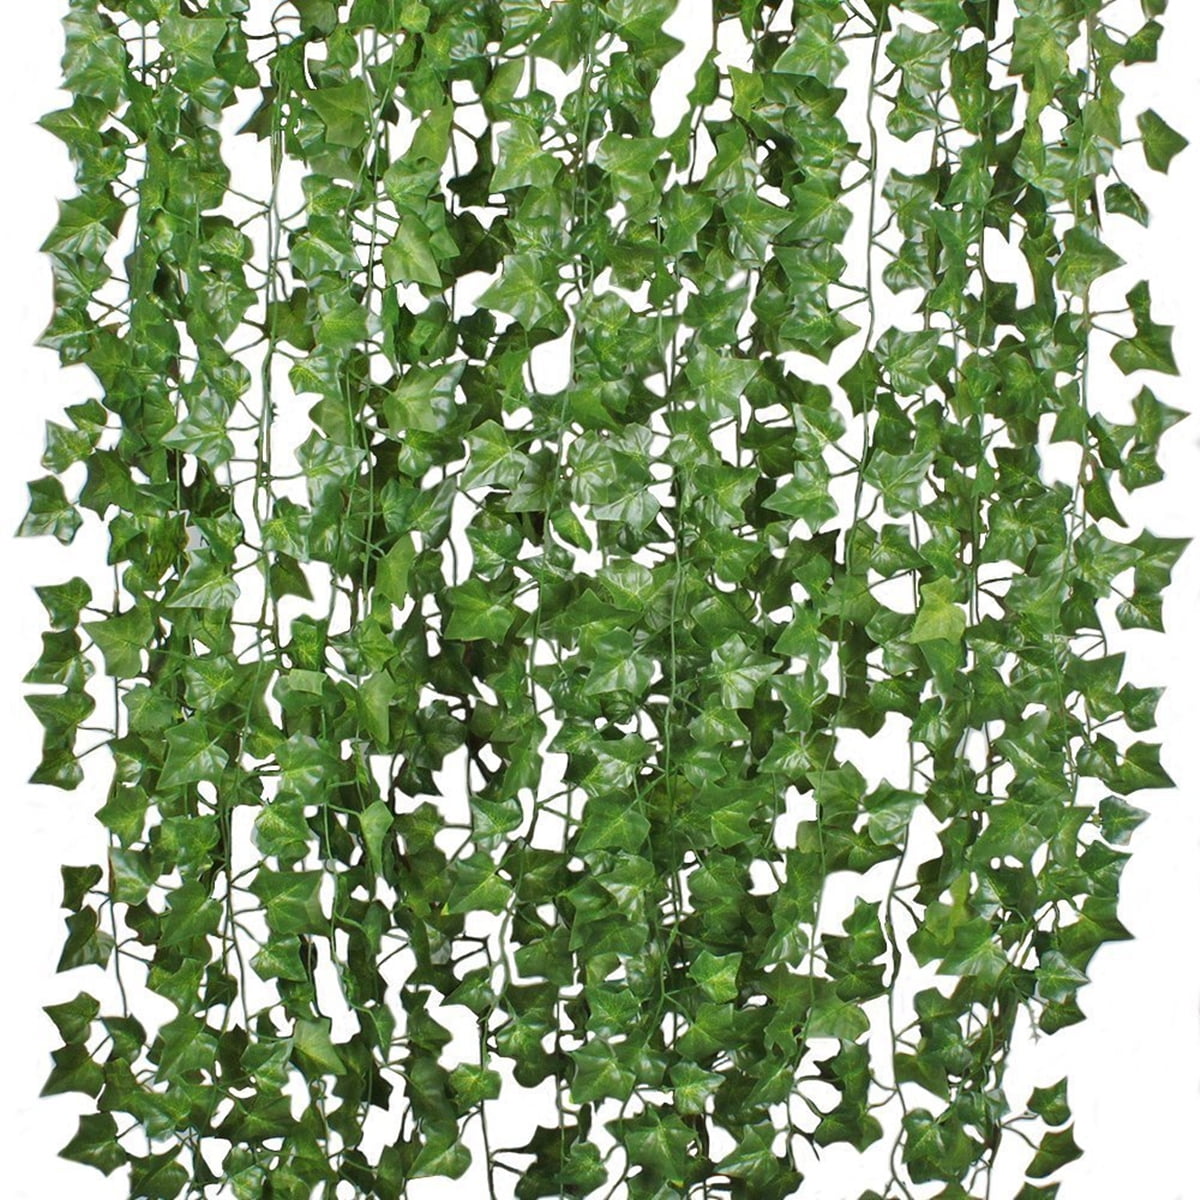 Hot Sale Green Plant Silk Leaf Foam Fake Artificial Foliage Flowers Home Decor